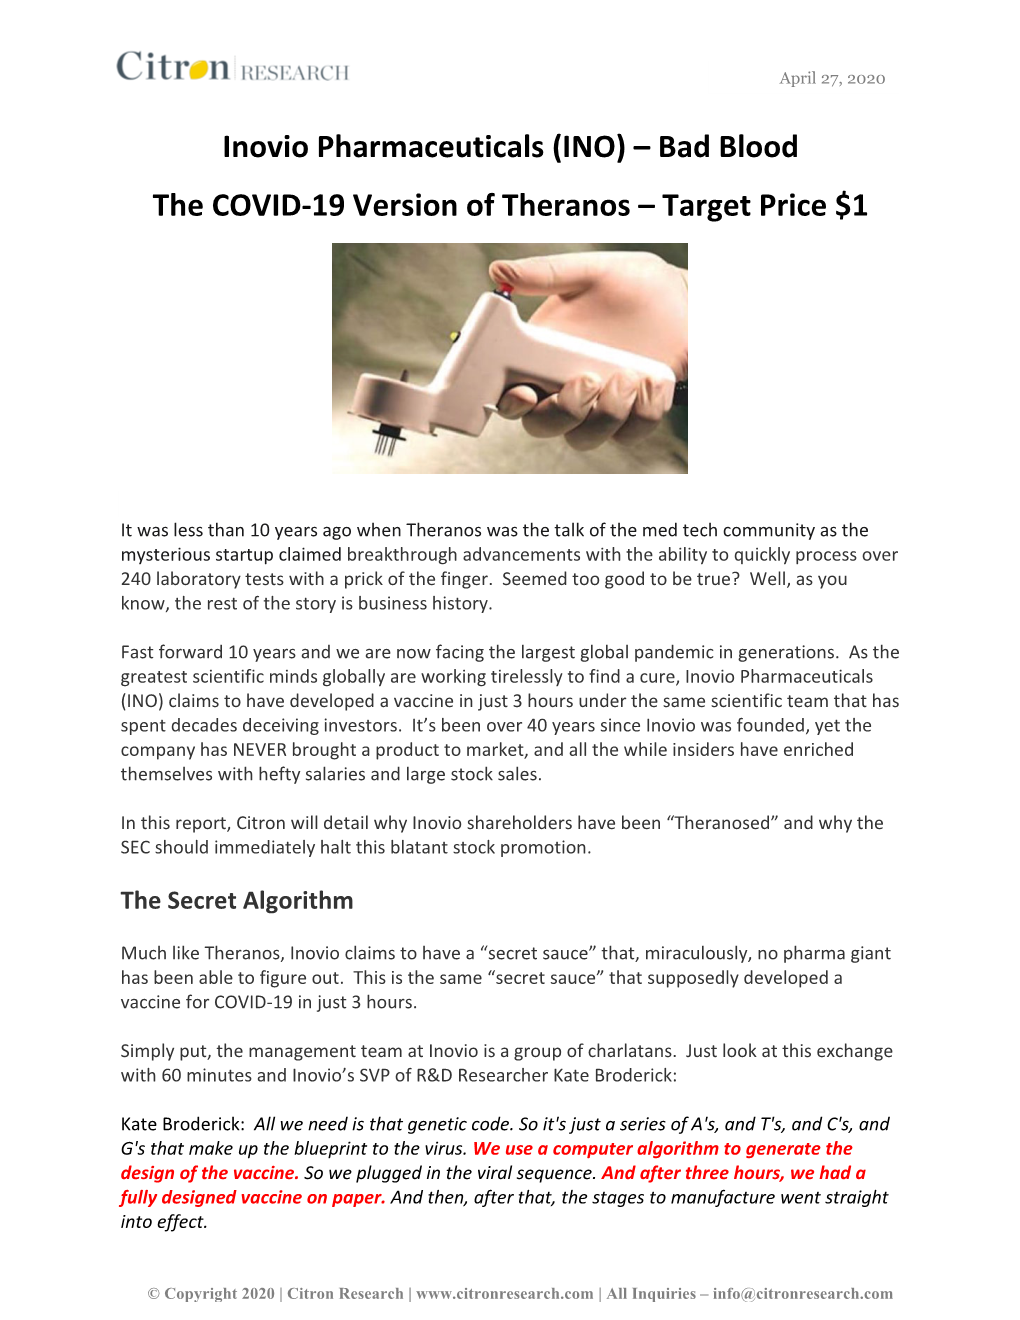 Inovio Pharmaceuticals (INO) – Bad Blood the COVID-19 Version of Theranos – Target Price $1